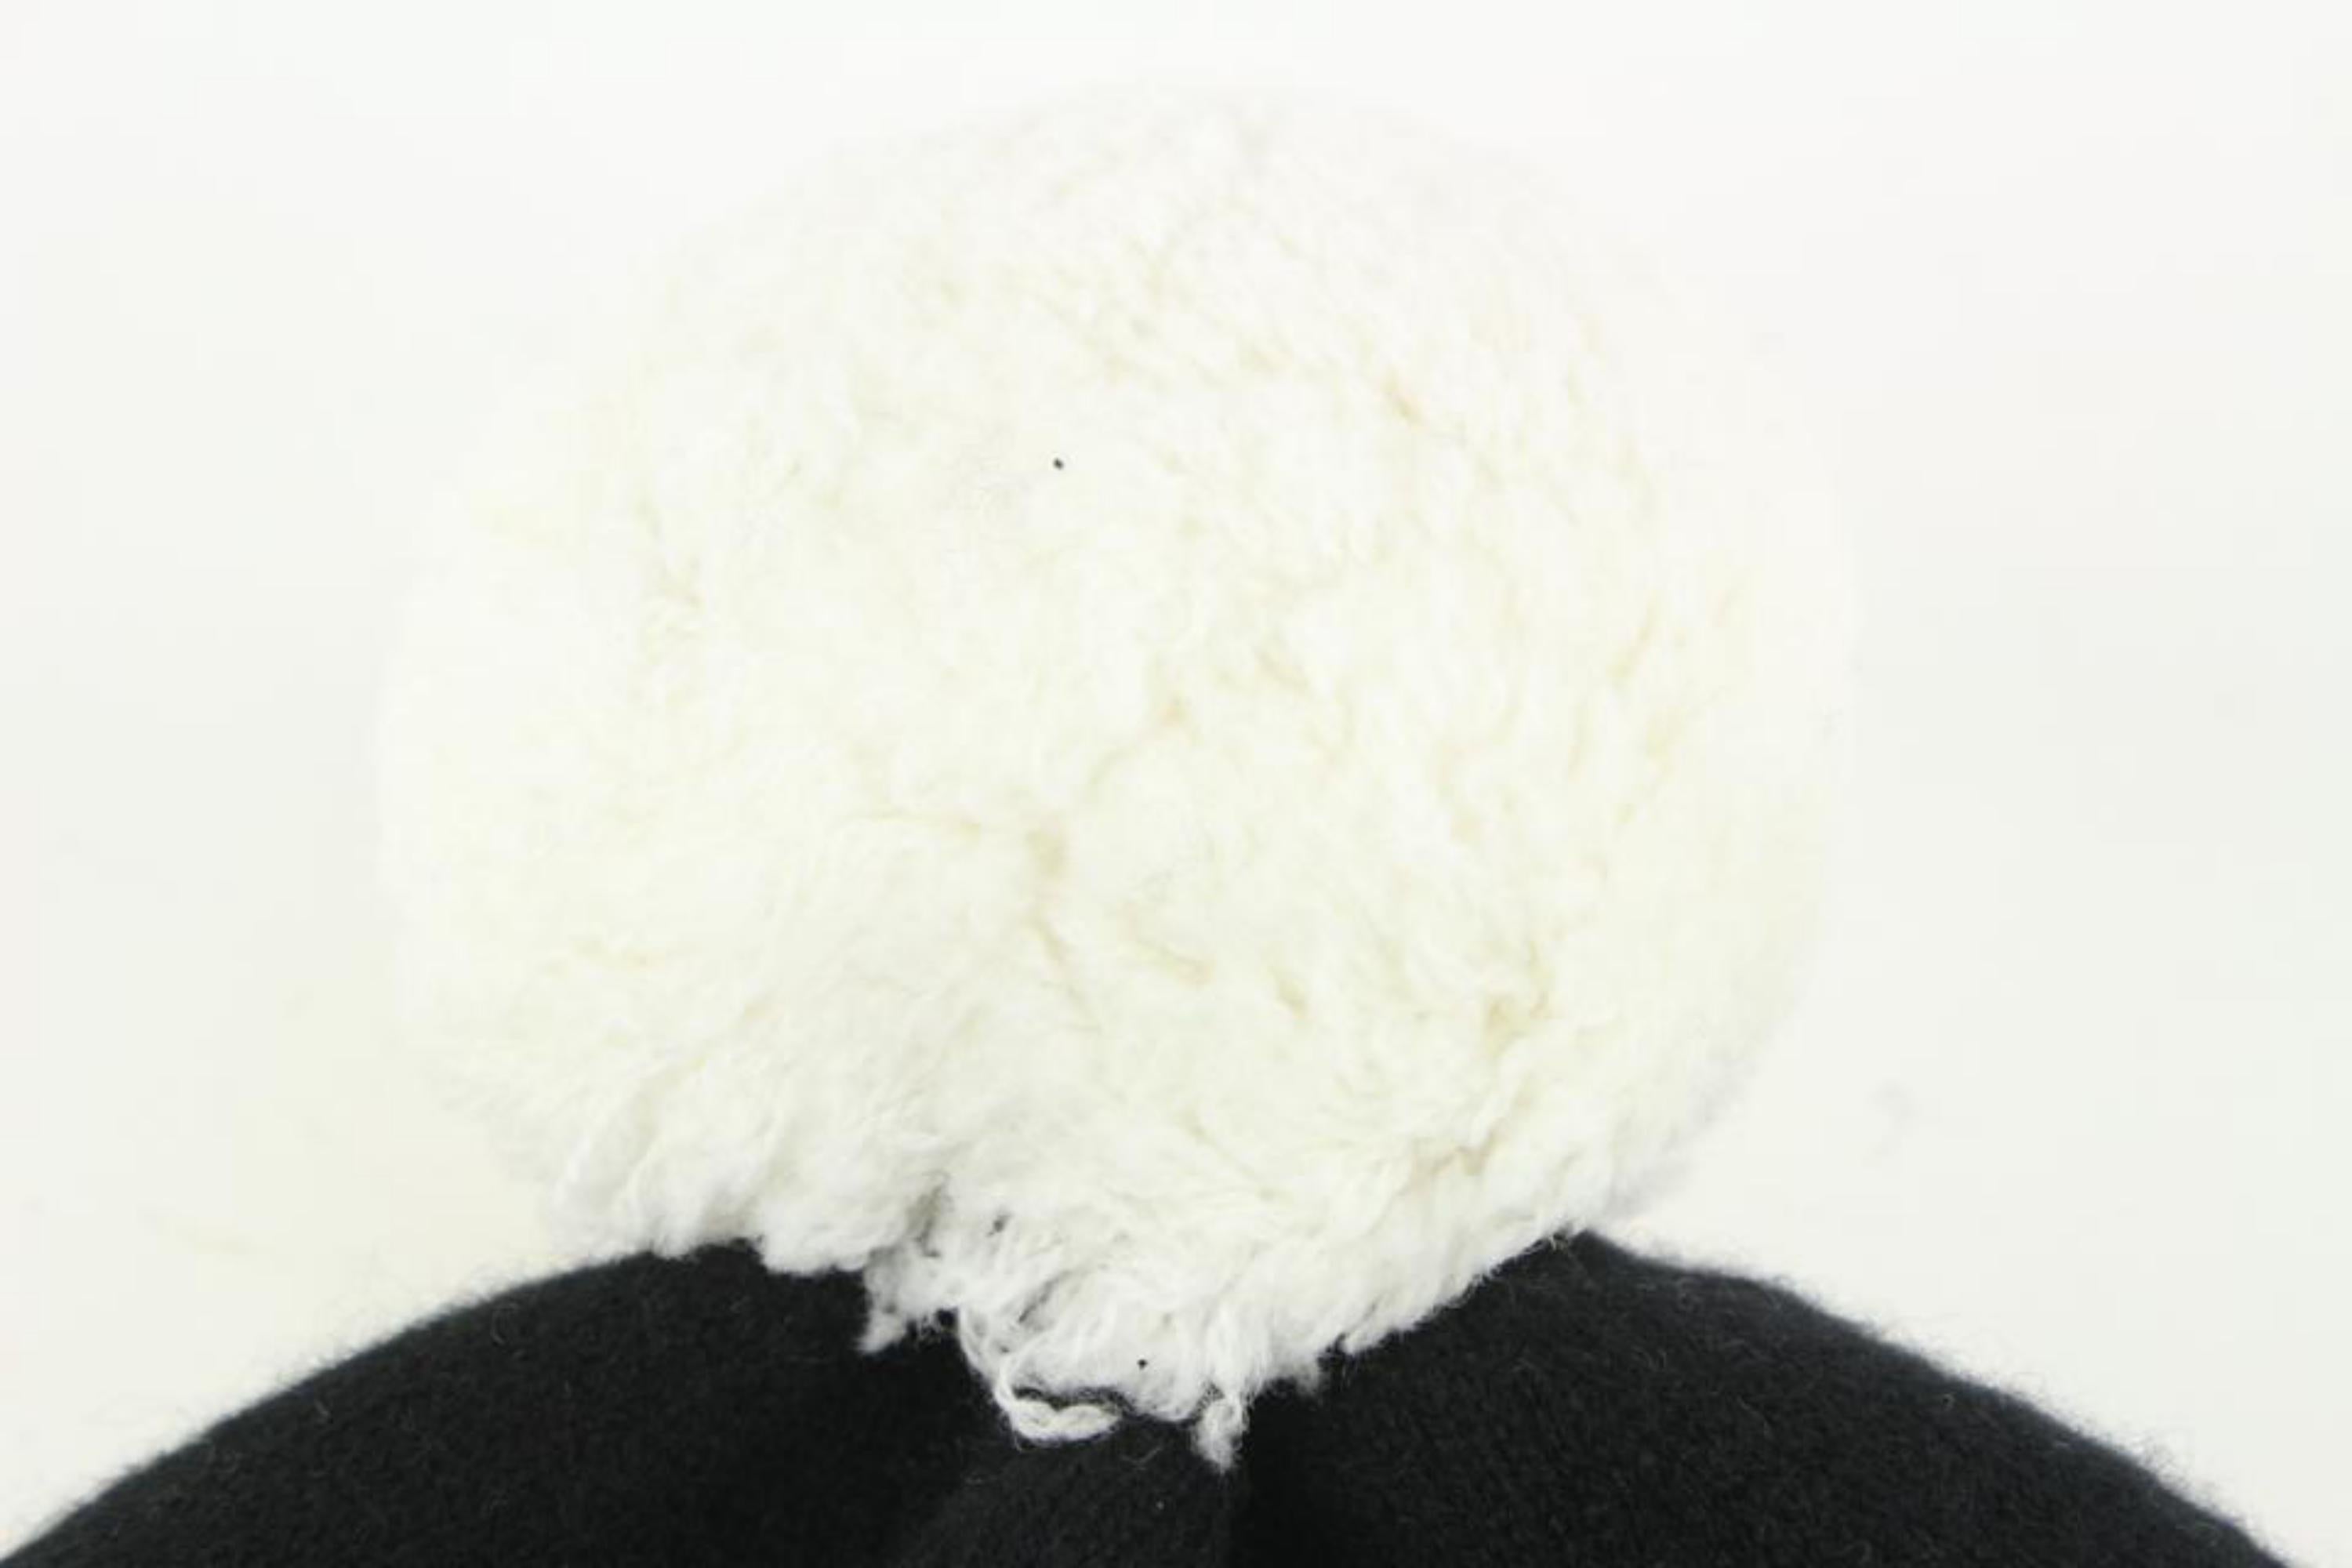 Chanel Black x White Cashmere Pom Pom Beanie Skull Cap Ski Hat 1213c5 2